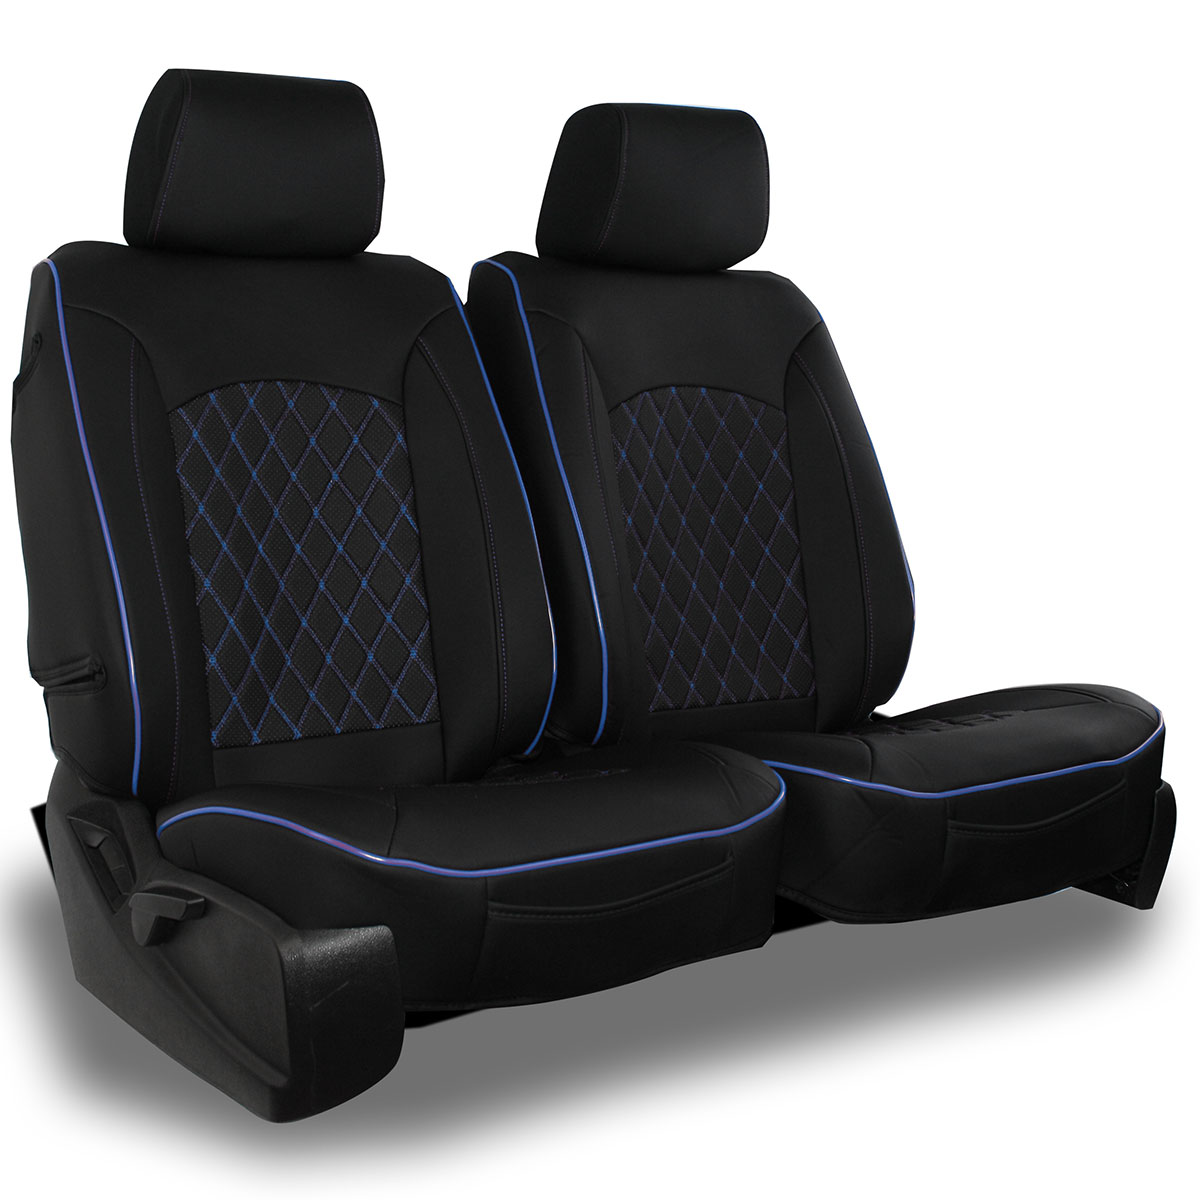 Semi-Custom Leatherette Diamond Seat Covers (Pair, Includes Headrest Covers)